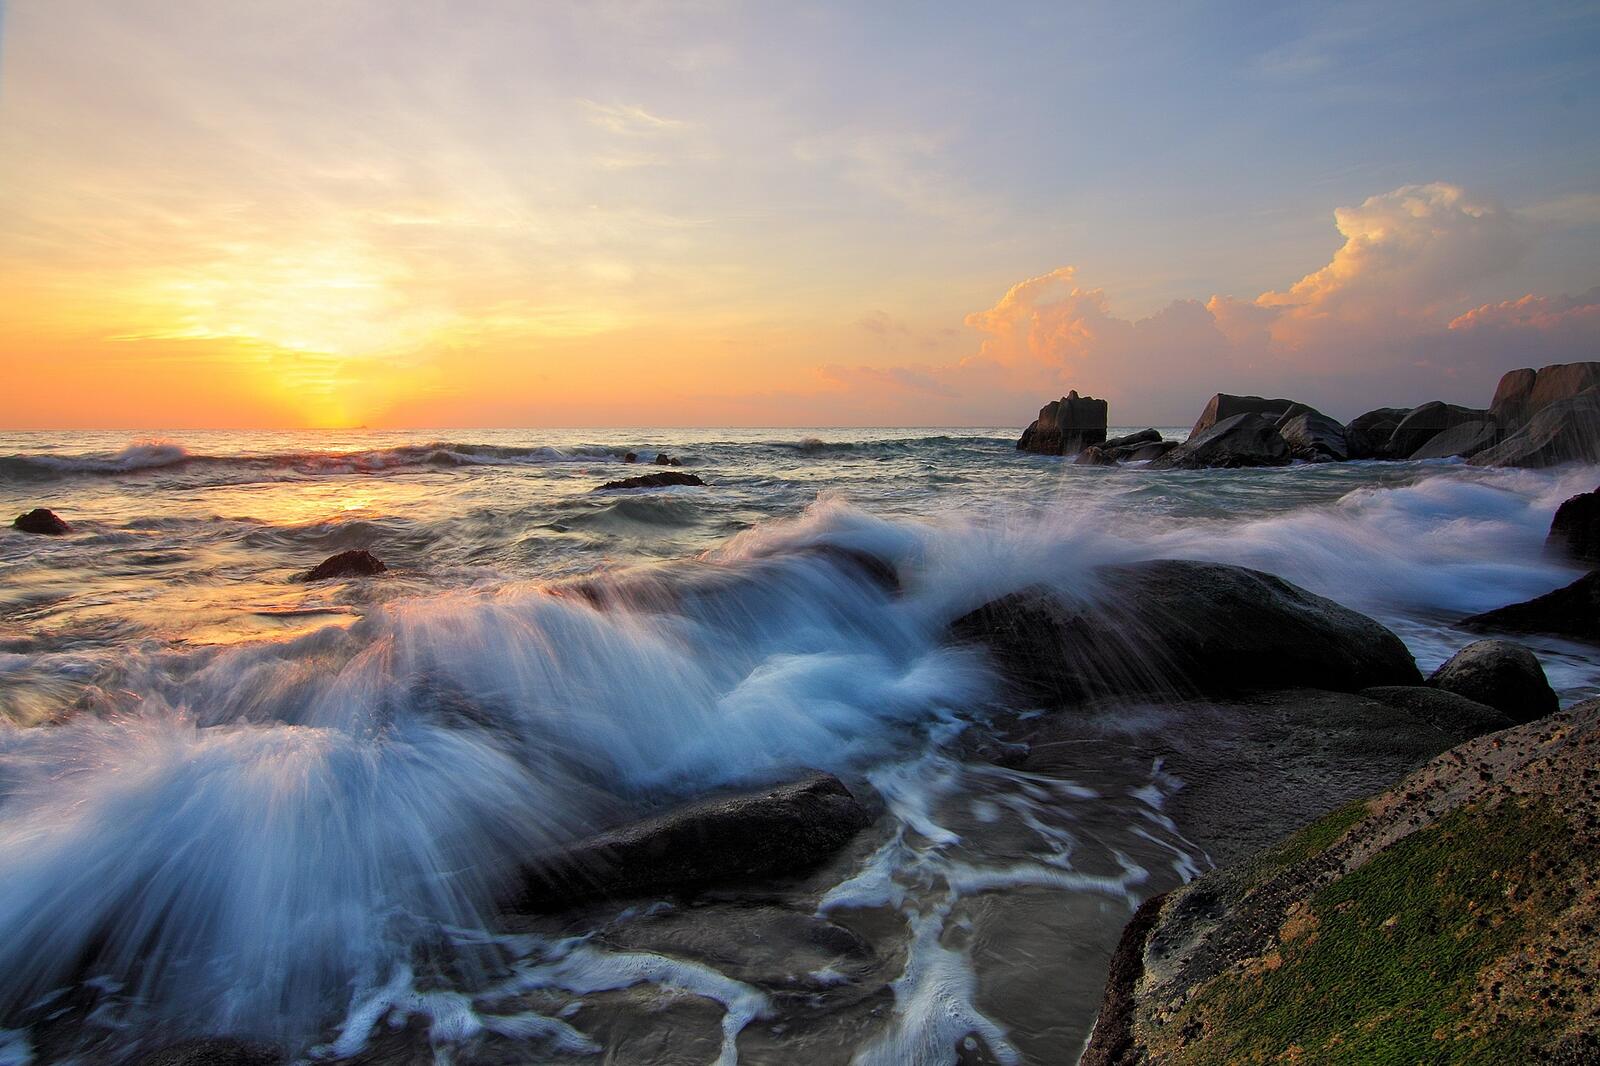 Free photo Sunset on a rocky coastline with waves